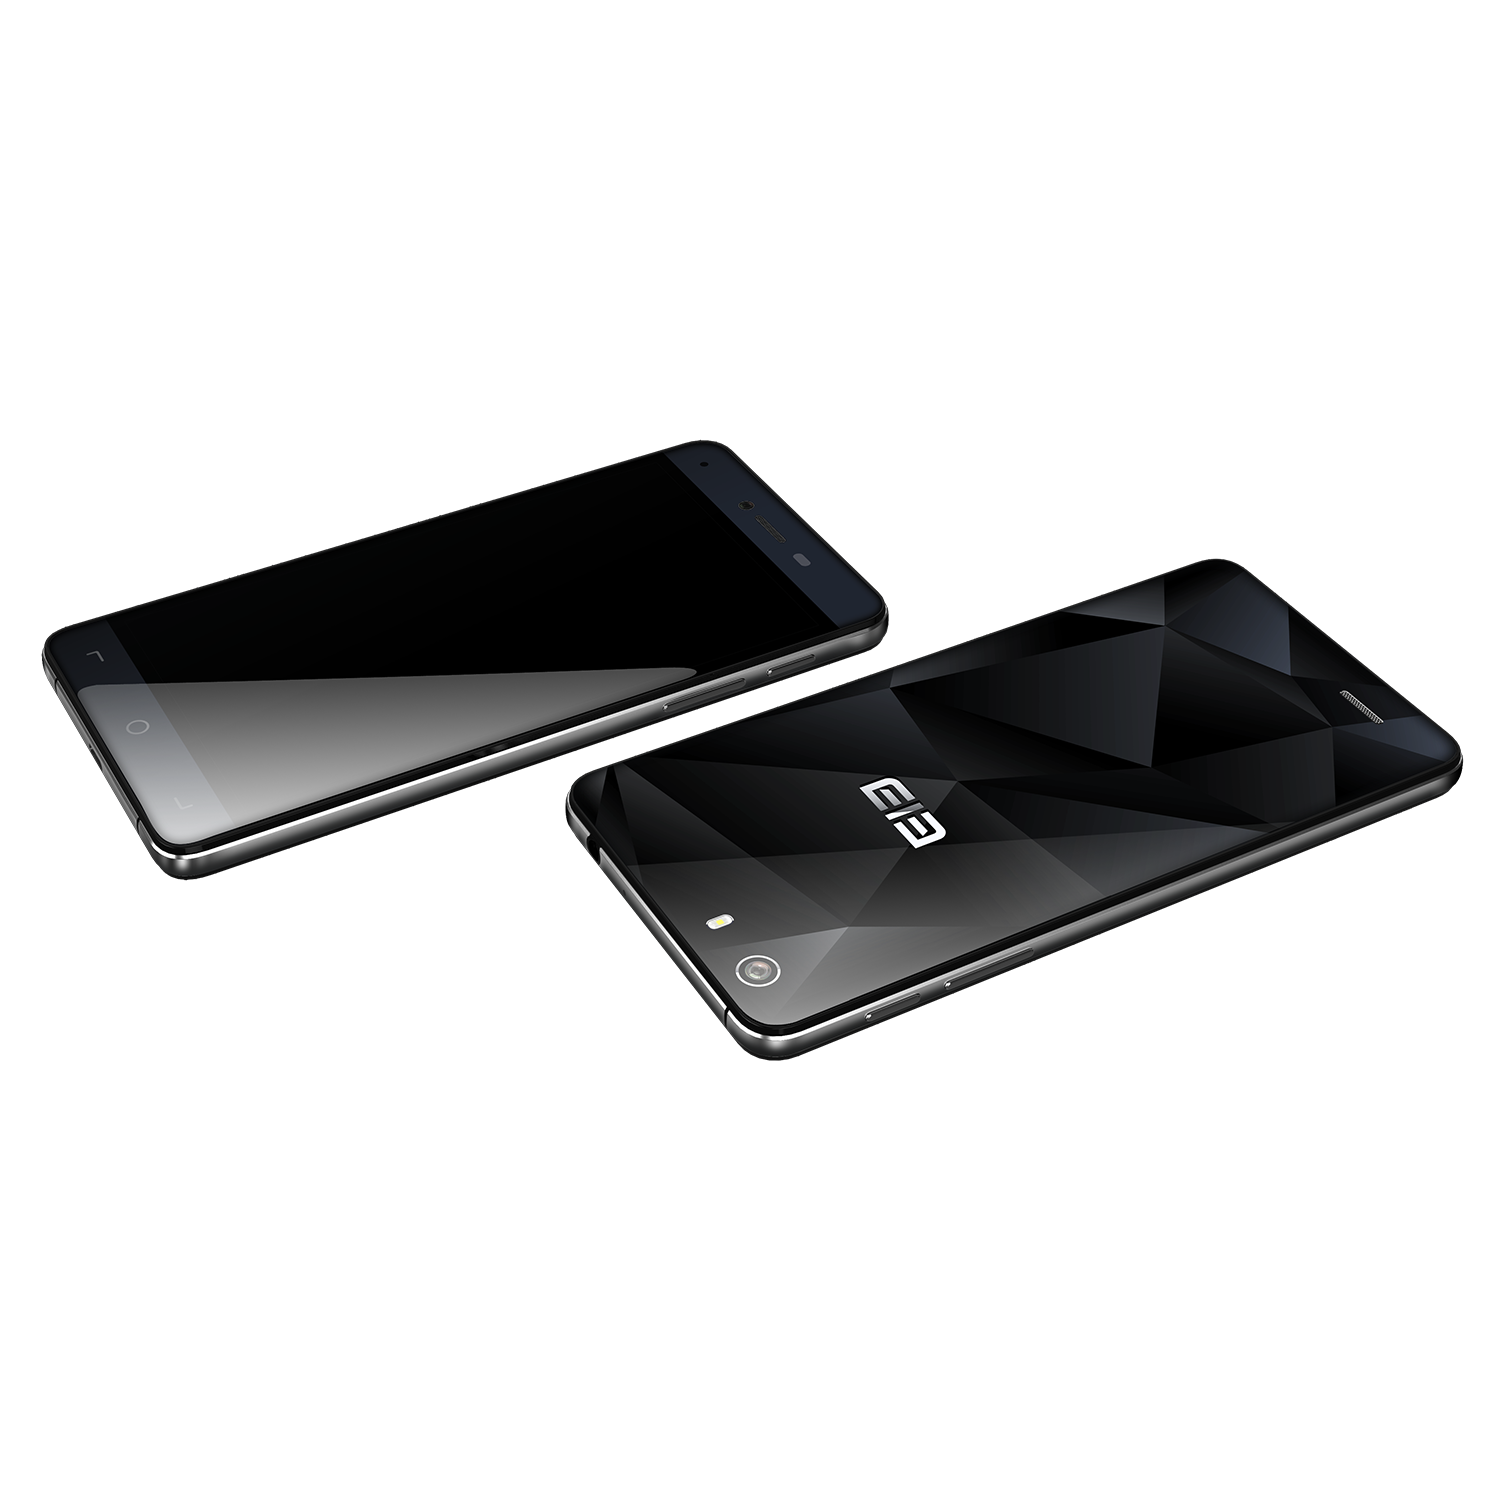 Elephone S2 Smartphone 5.0 Inch Dual Glass 4G 64bit MTK6735 Android 5.1 2GB 16GB